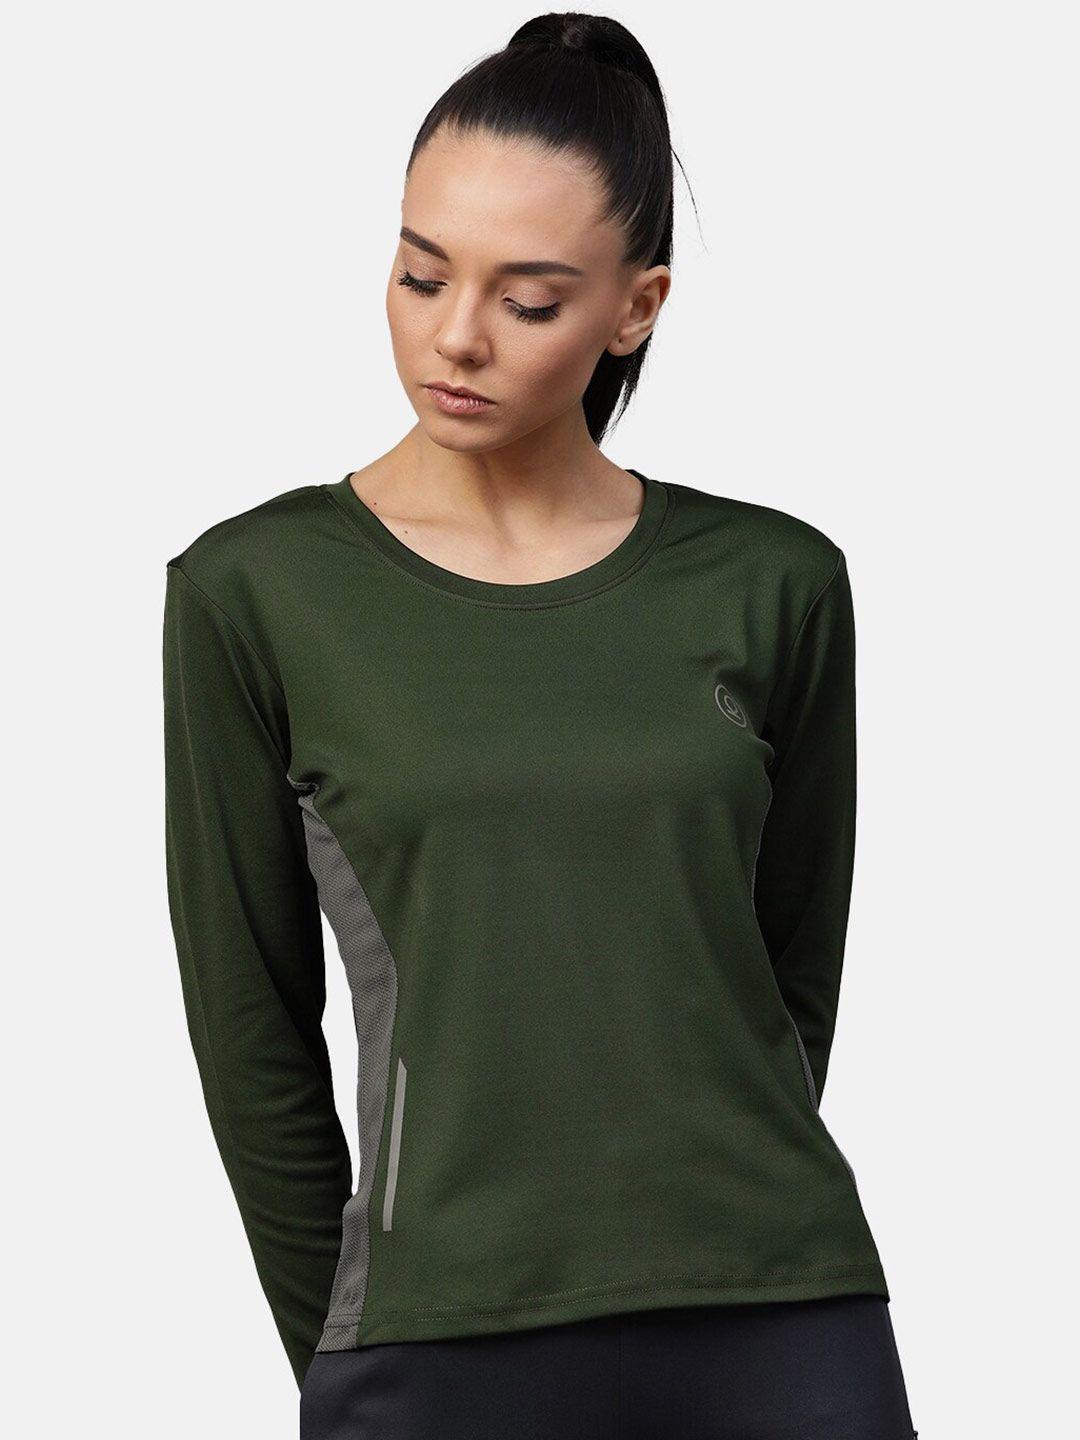 chkokko-women-green-yoga-t-shirt